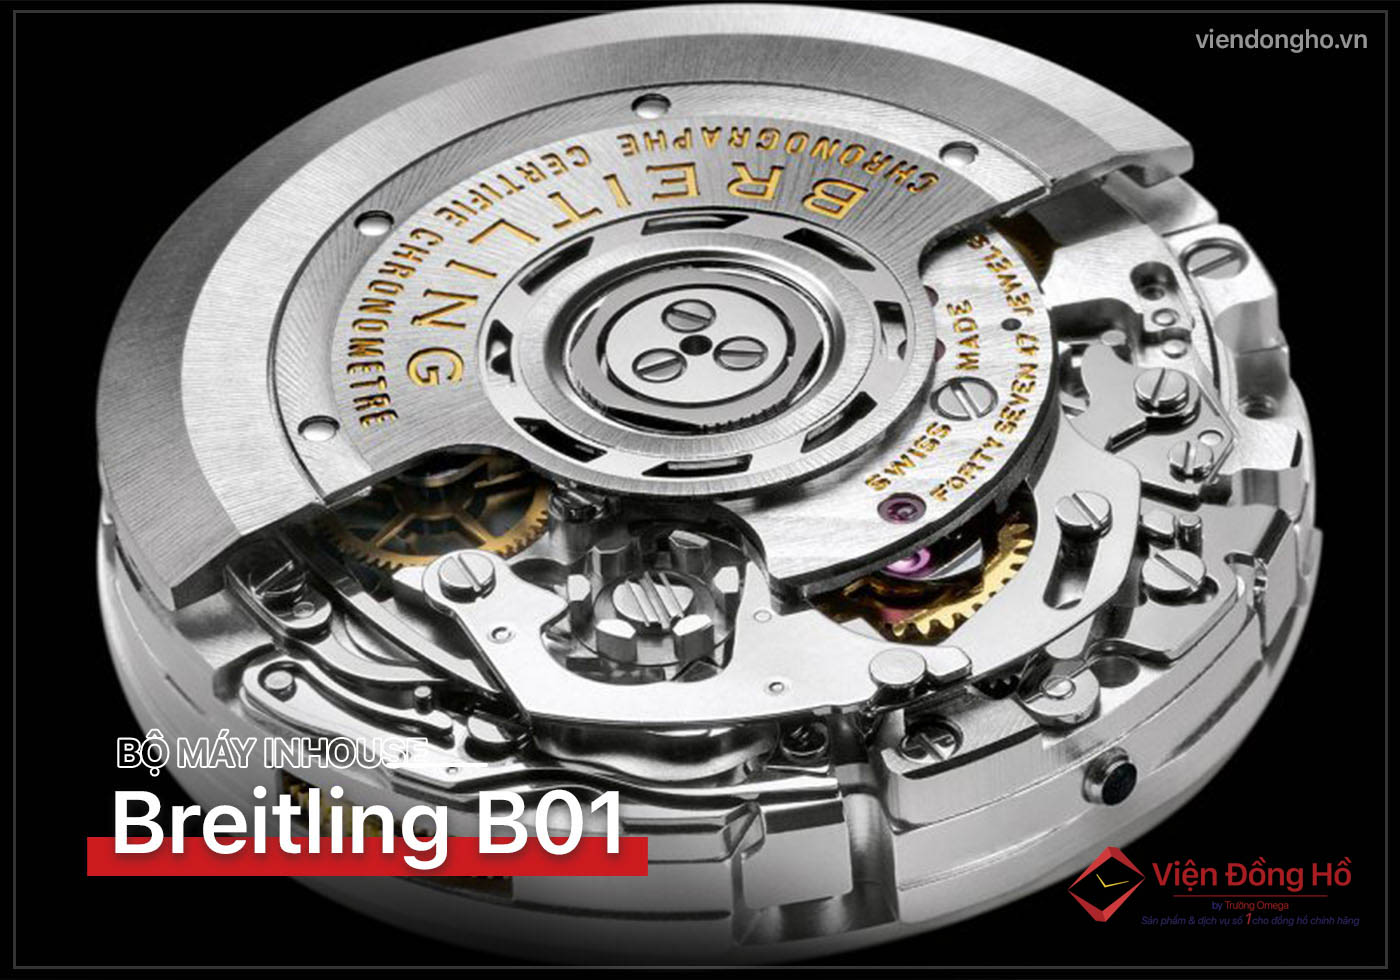 Breitling B01 - May dong ho In-house dau tien cua thuong hieu 7